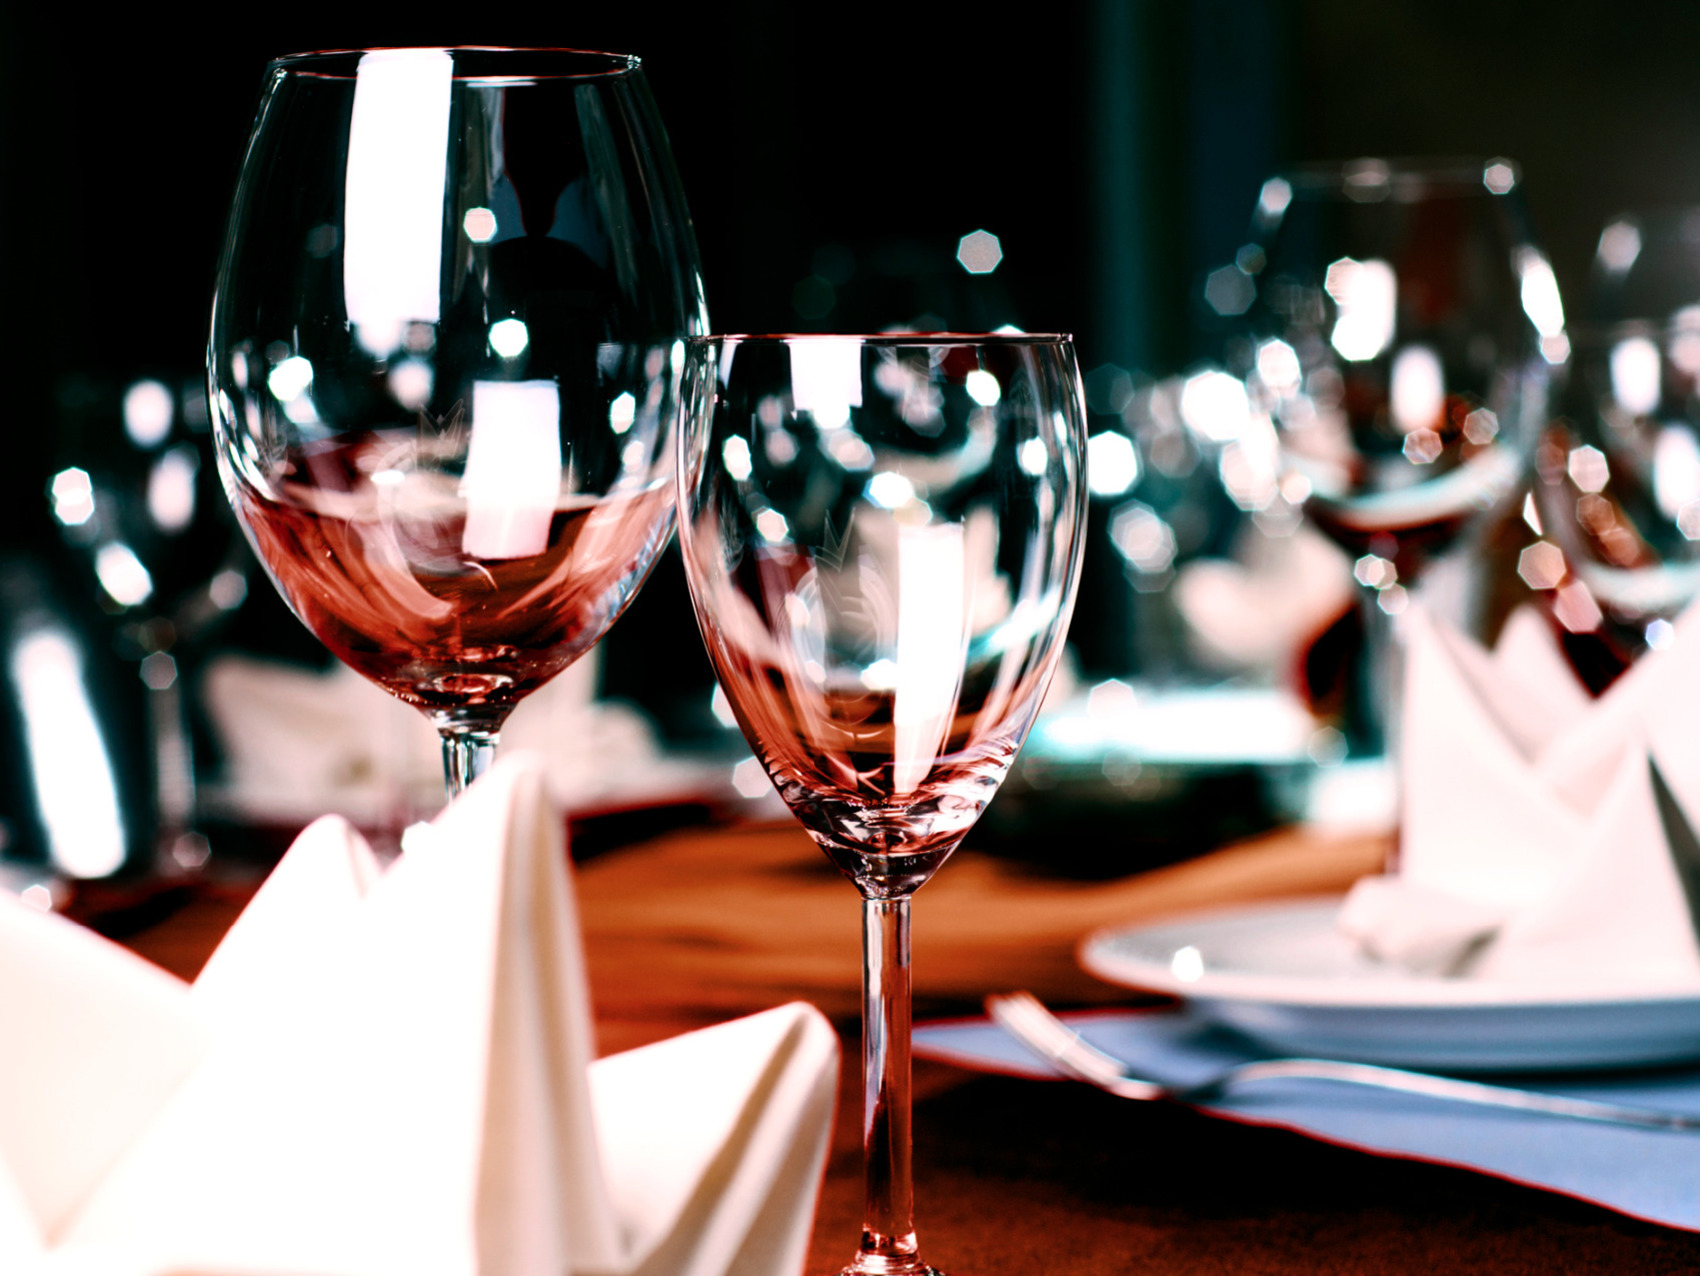 wine glasses in restaurant on table